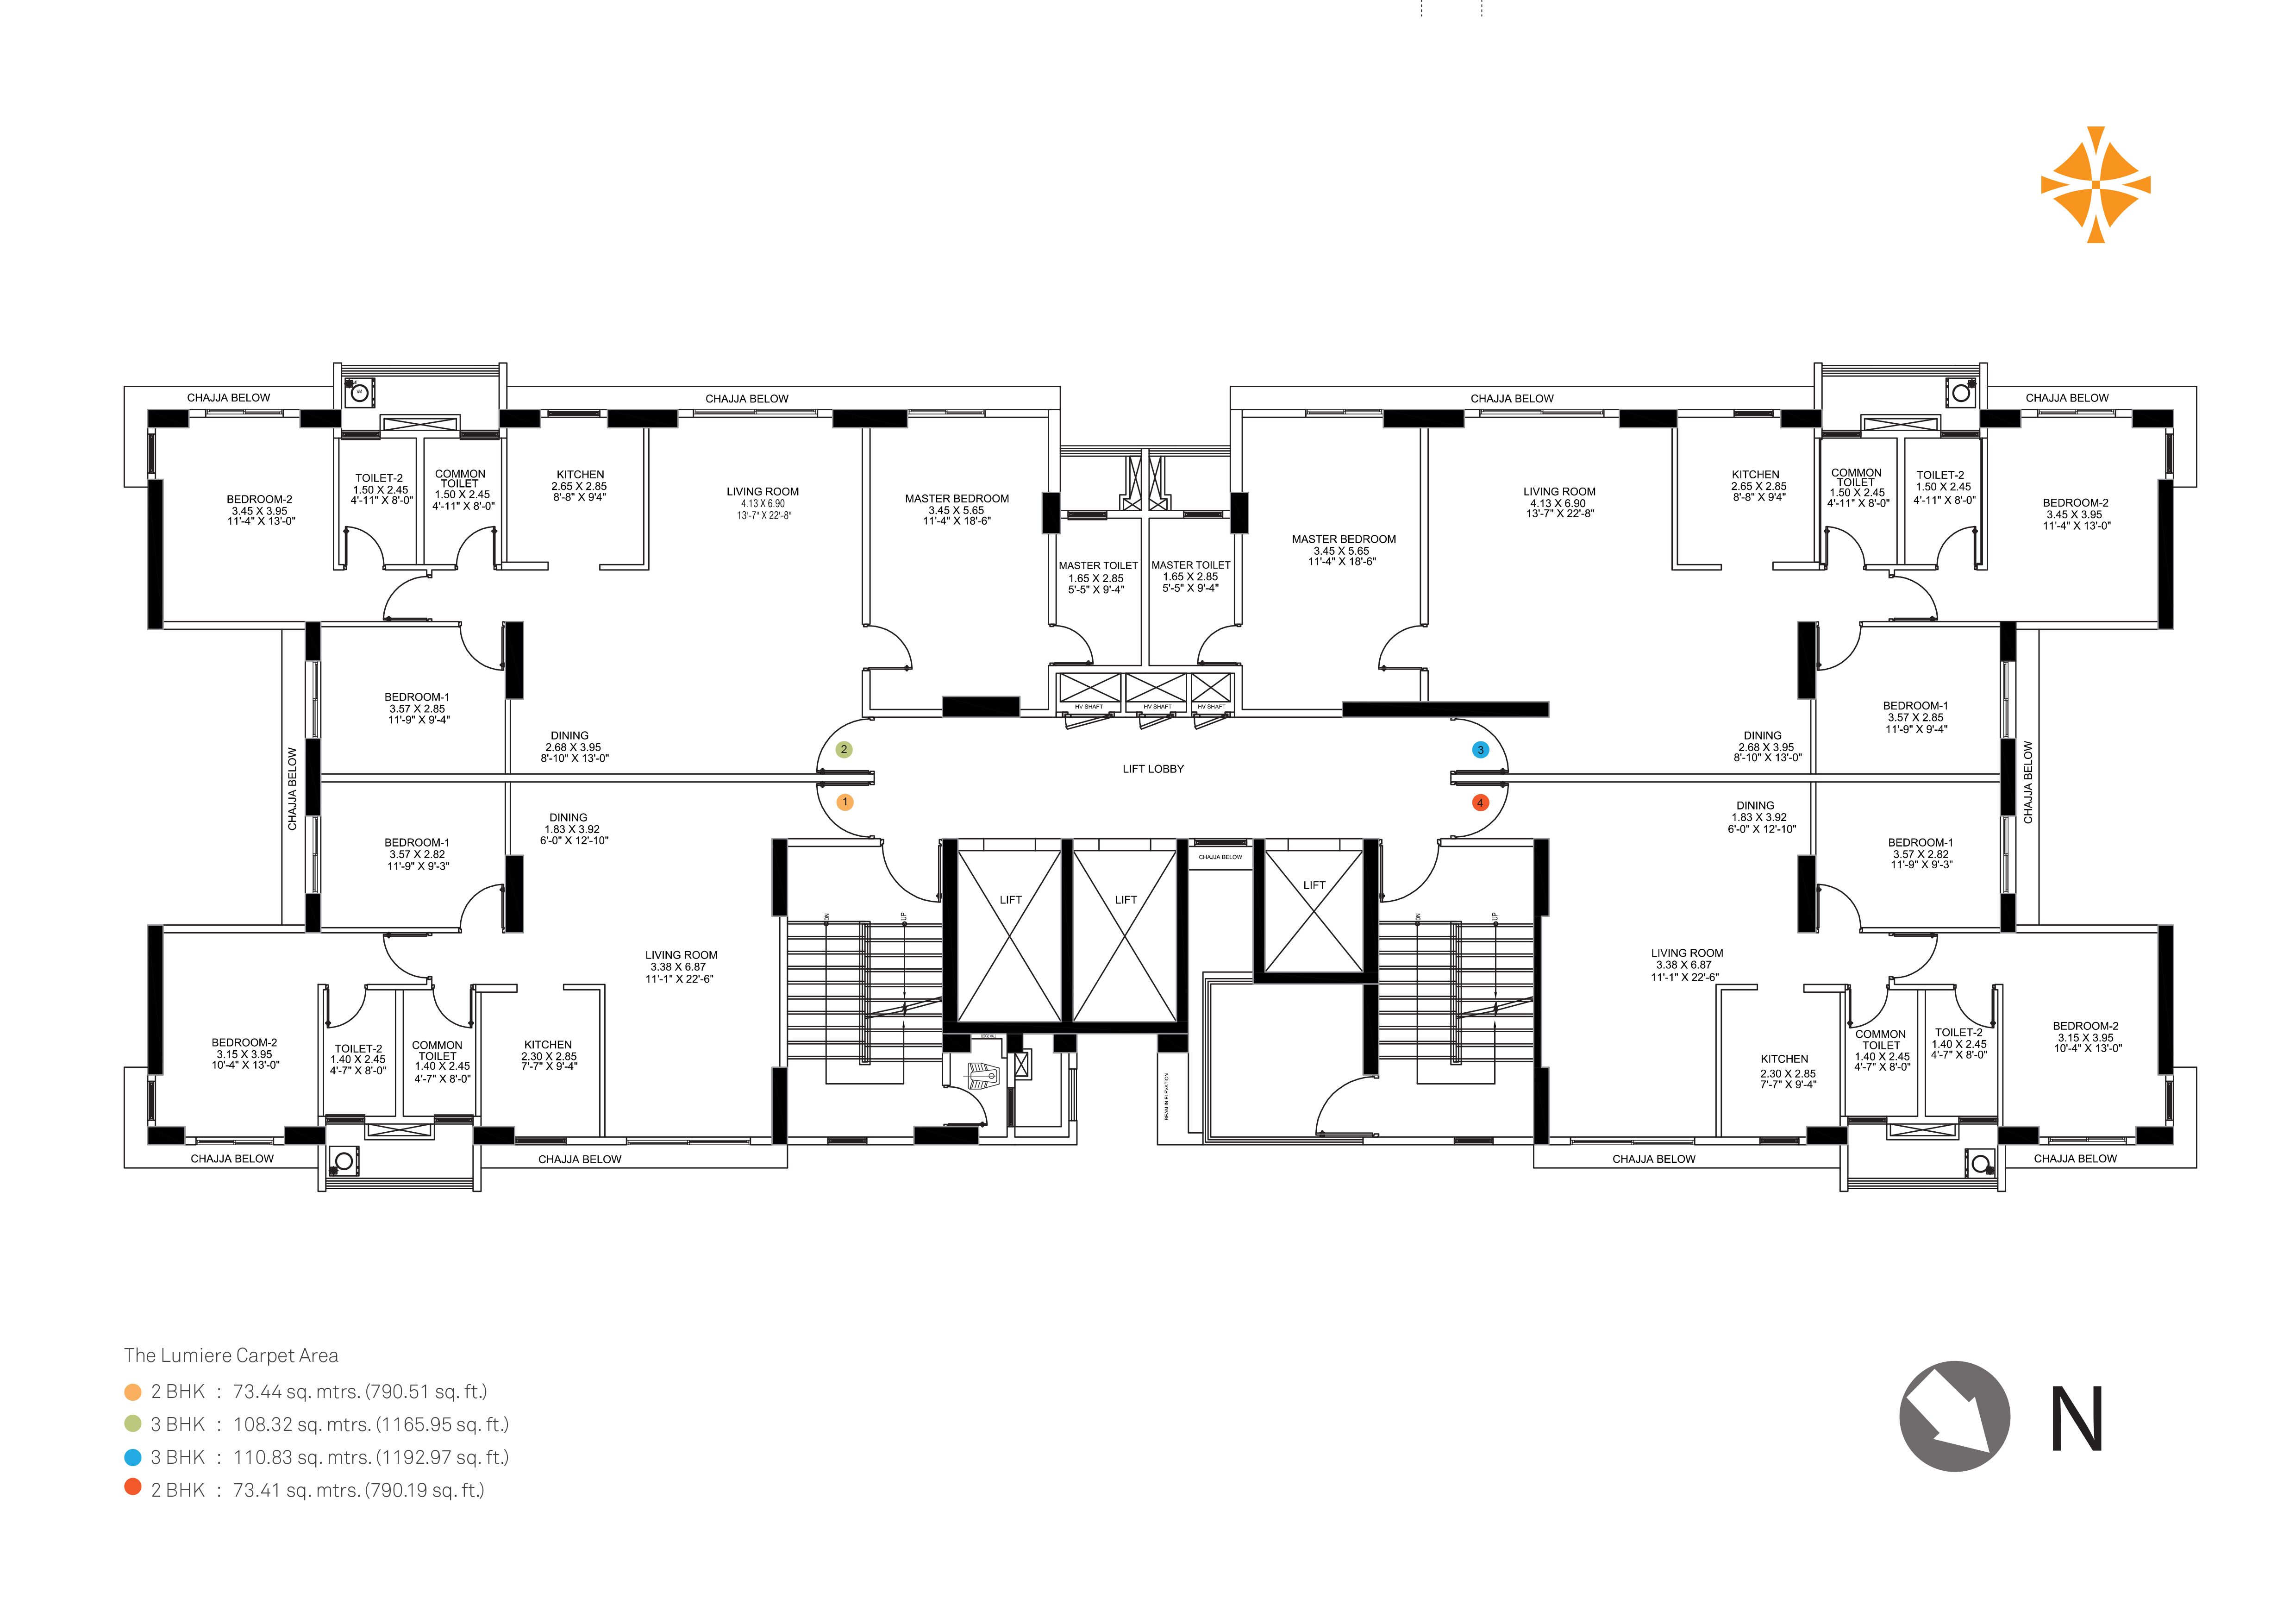 Residential apartments floor plans